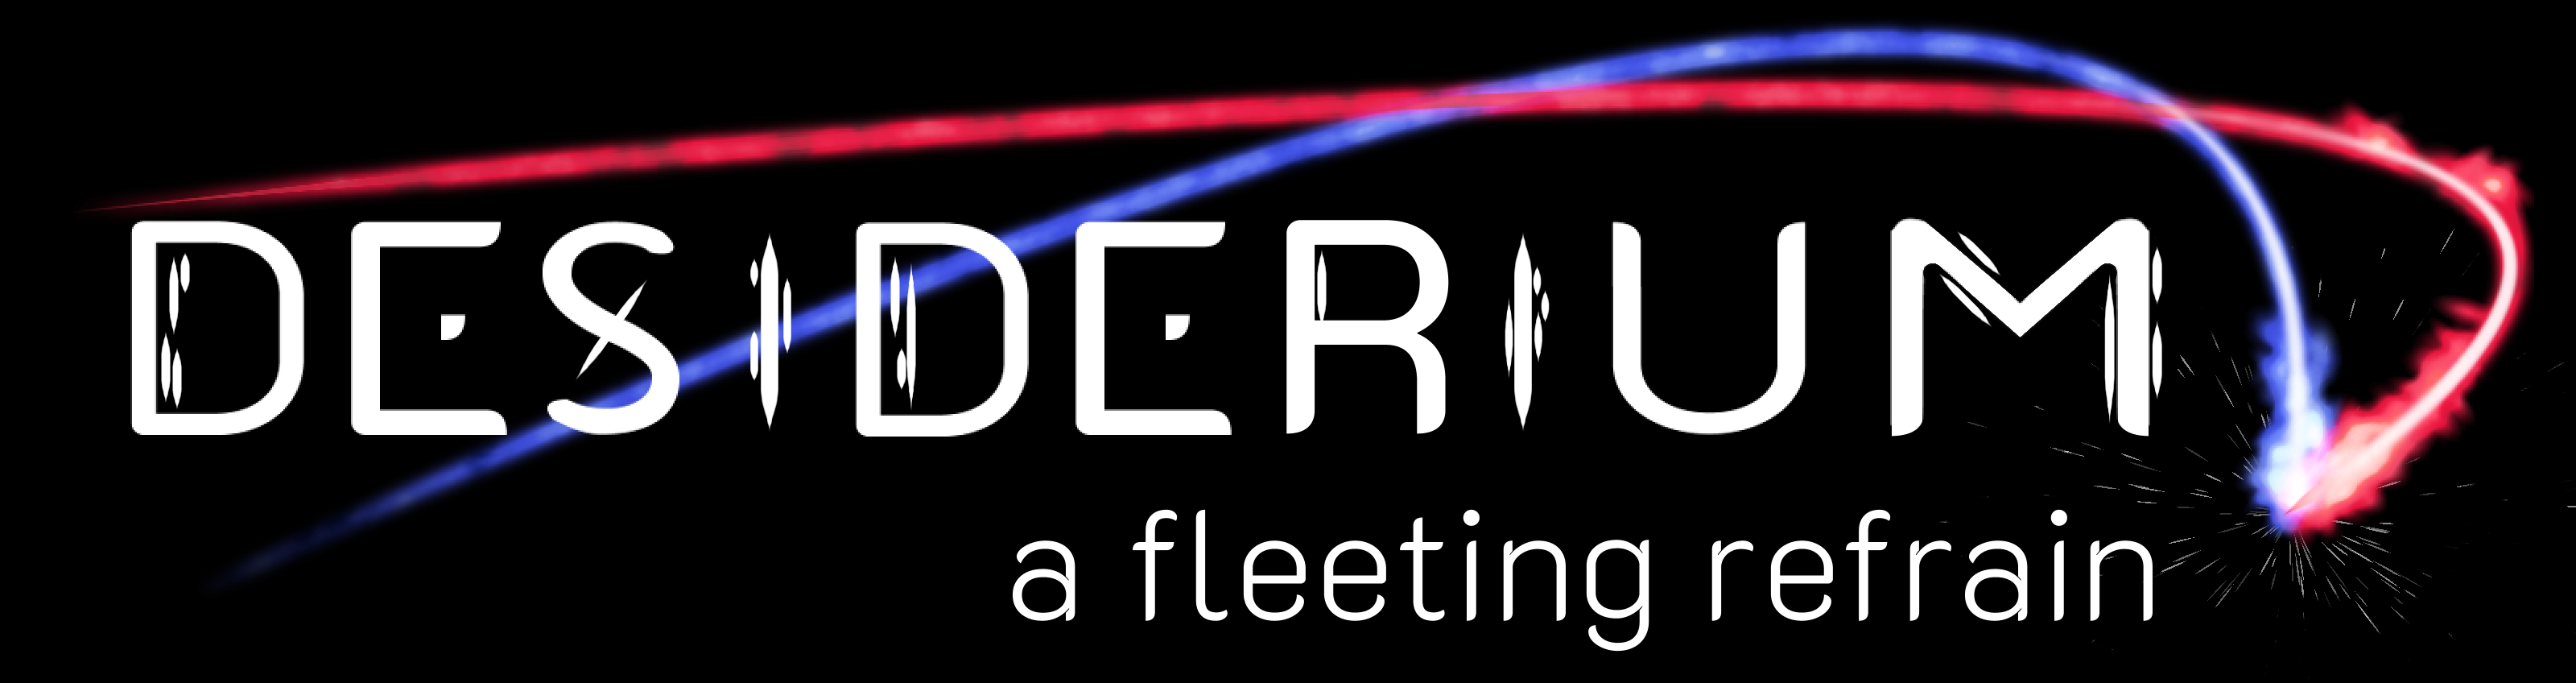 Desiderium: a fleeting refrain